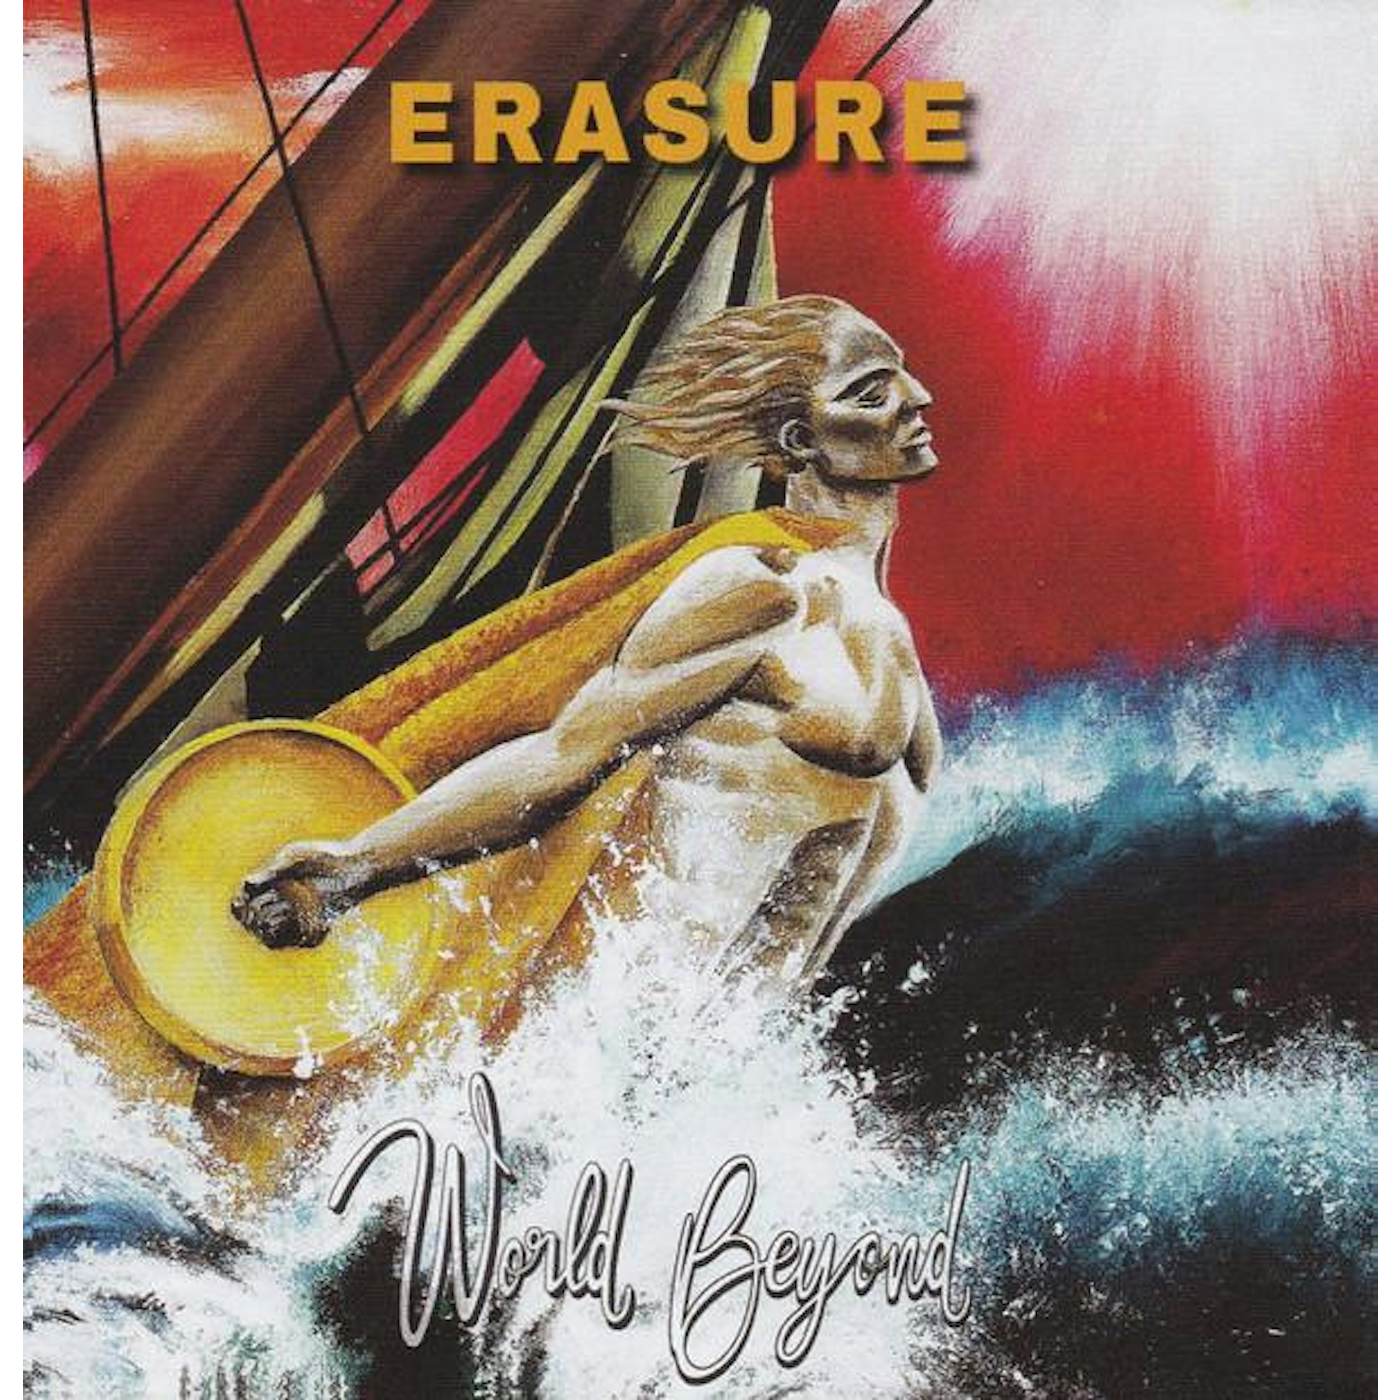 Erasure WORLD BEYOND CD